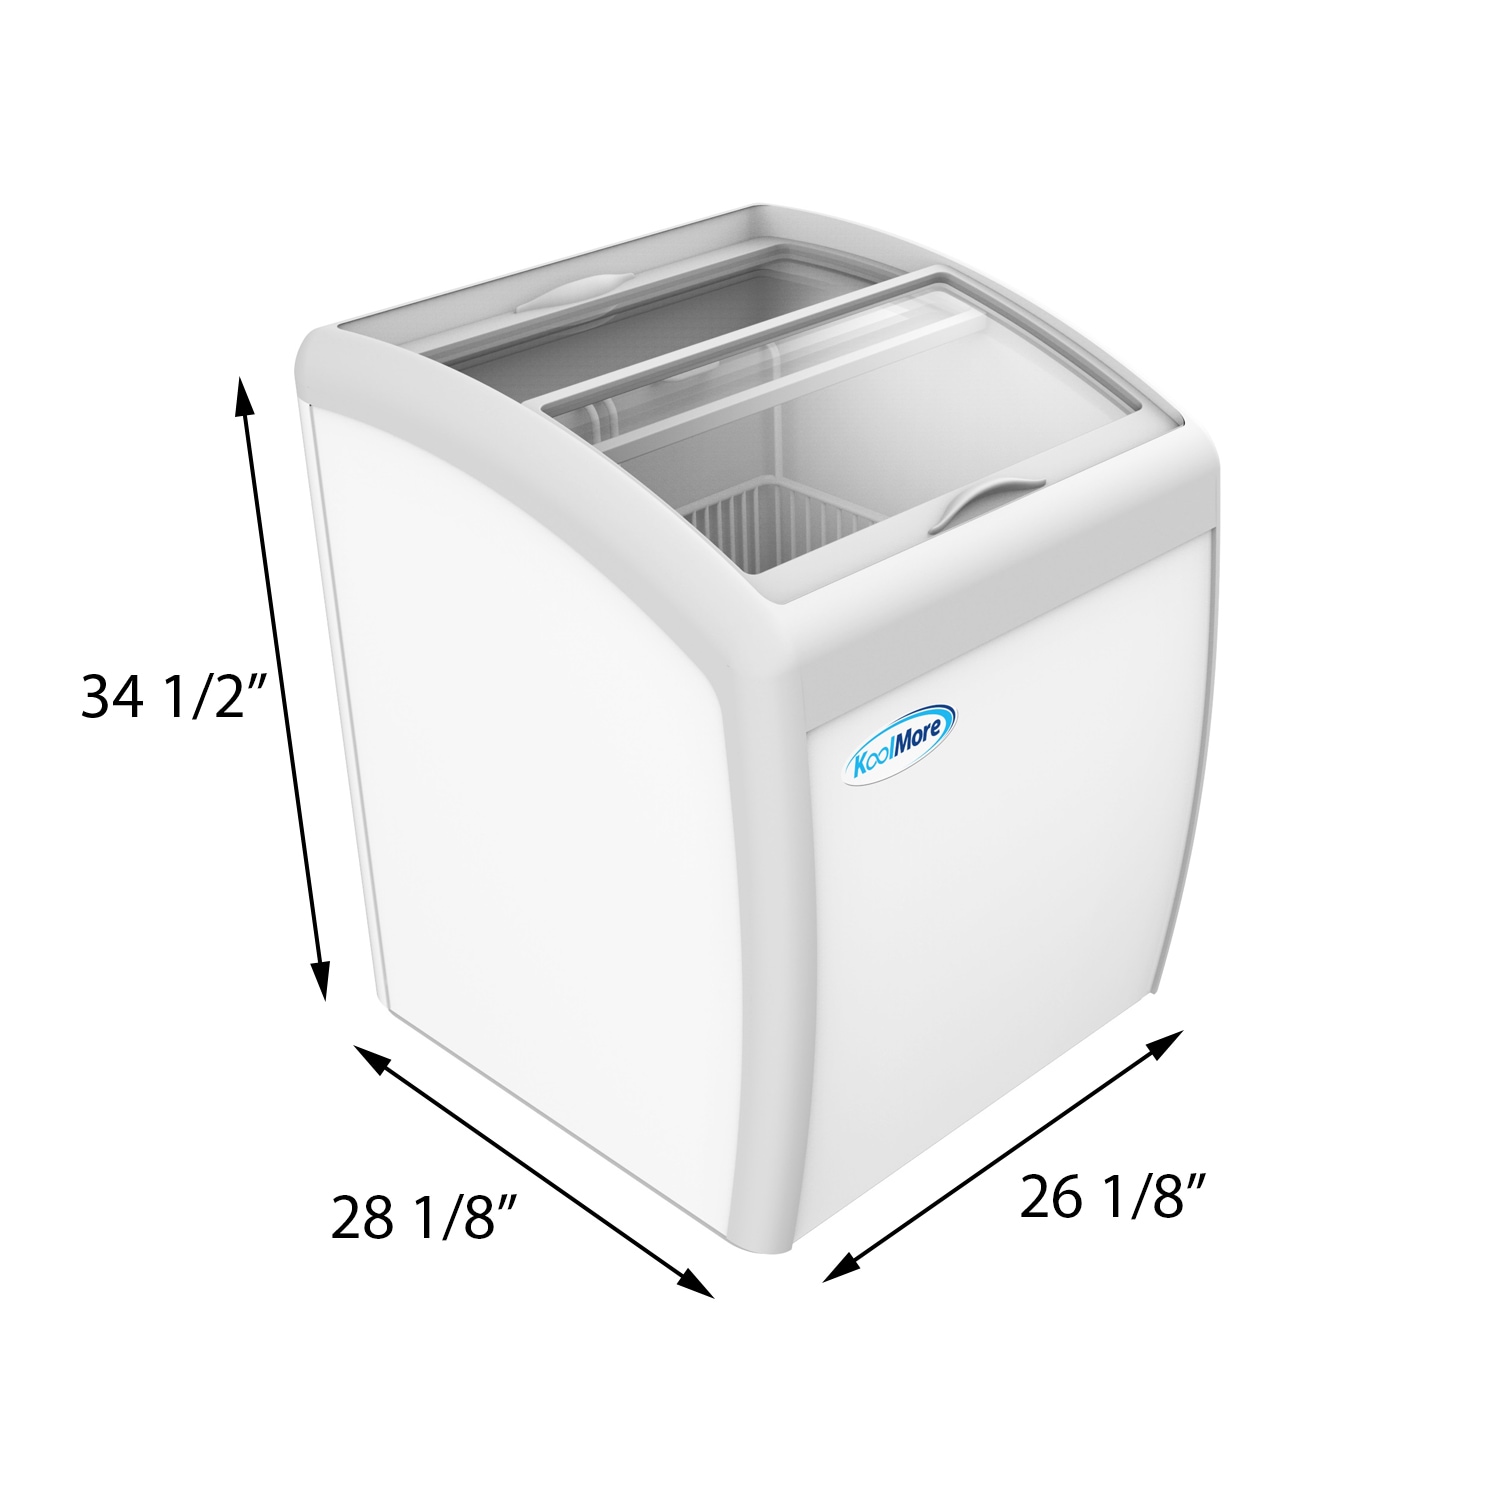 KoolMore 9-cu ft Manual Commercial Freezer (White)